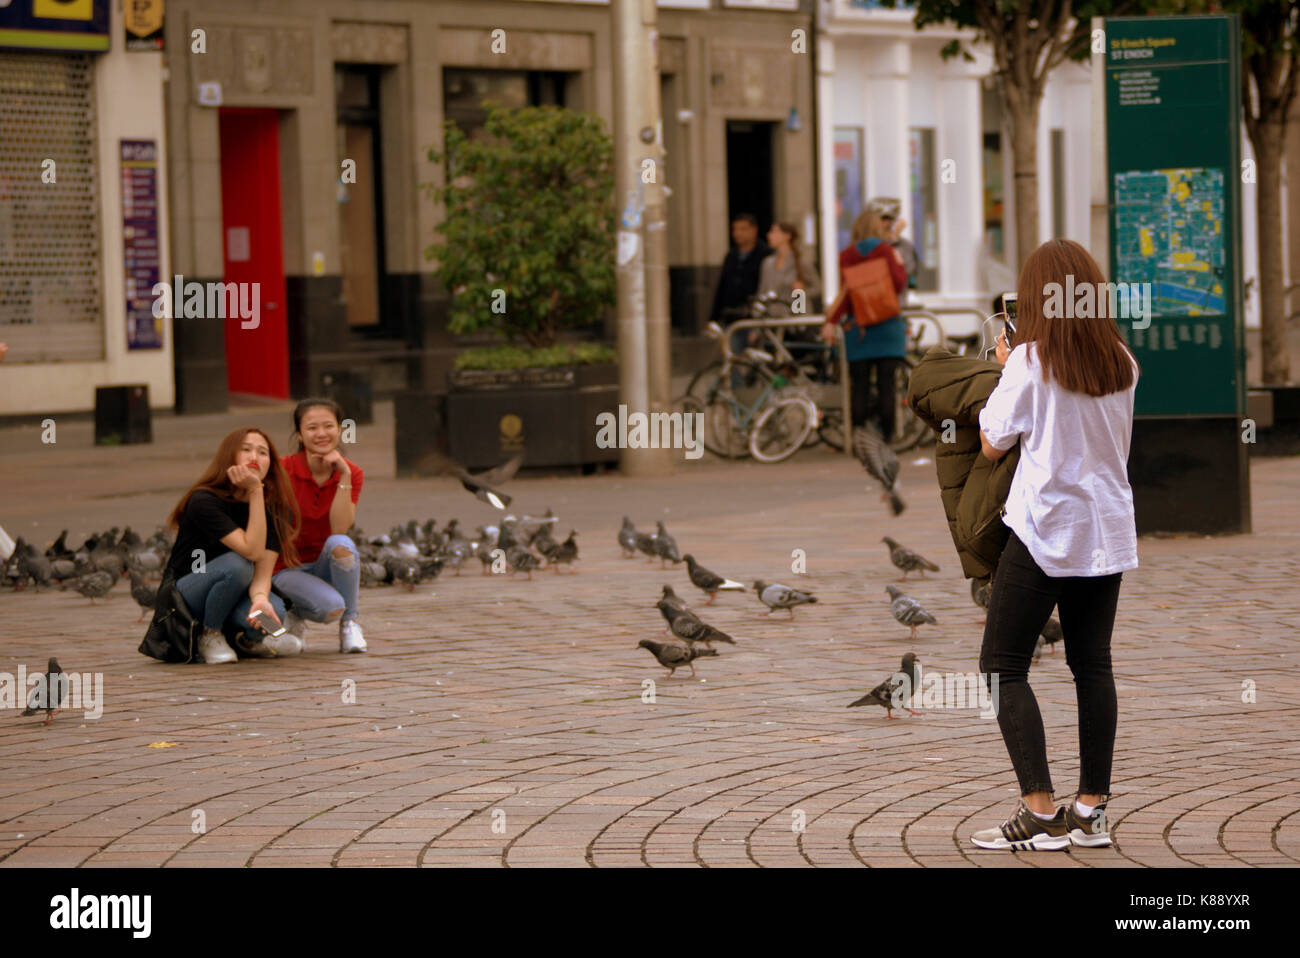 Tres mujeres niñas tomar selfies chino con palomas En St Enoch Square Glasgow Foto de stock